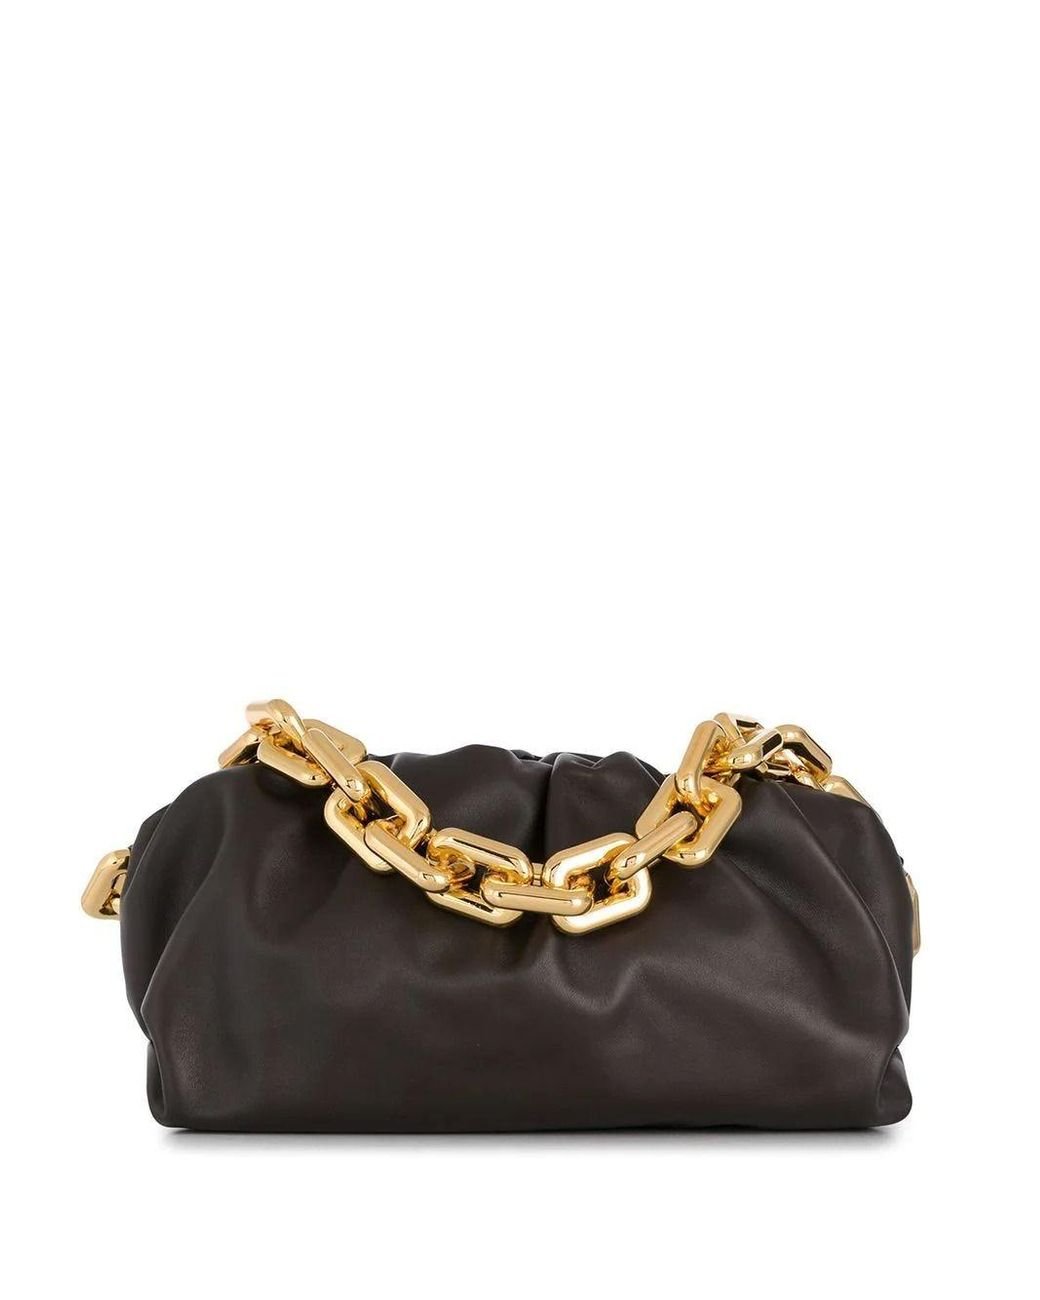 Bottega Veneta Leather The Chain Pouch Shoulder Bag in Brown - Lyst